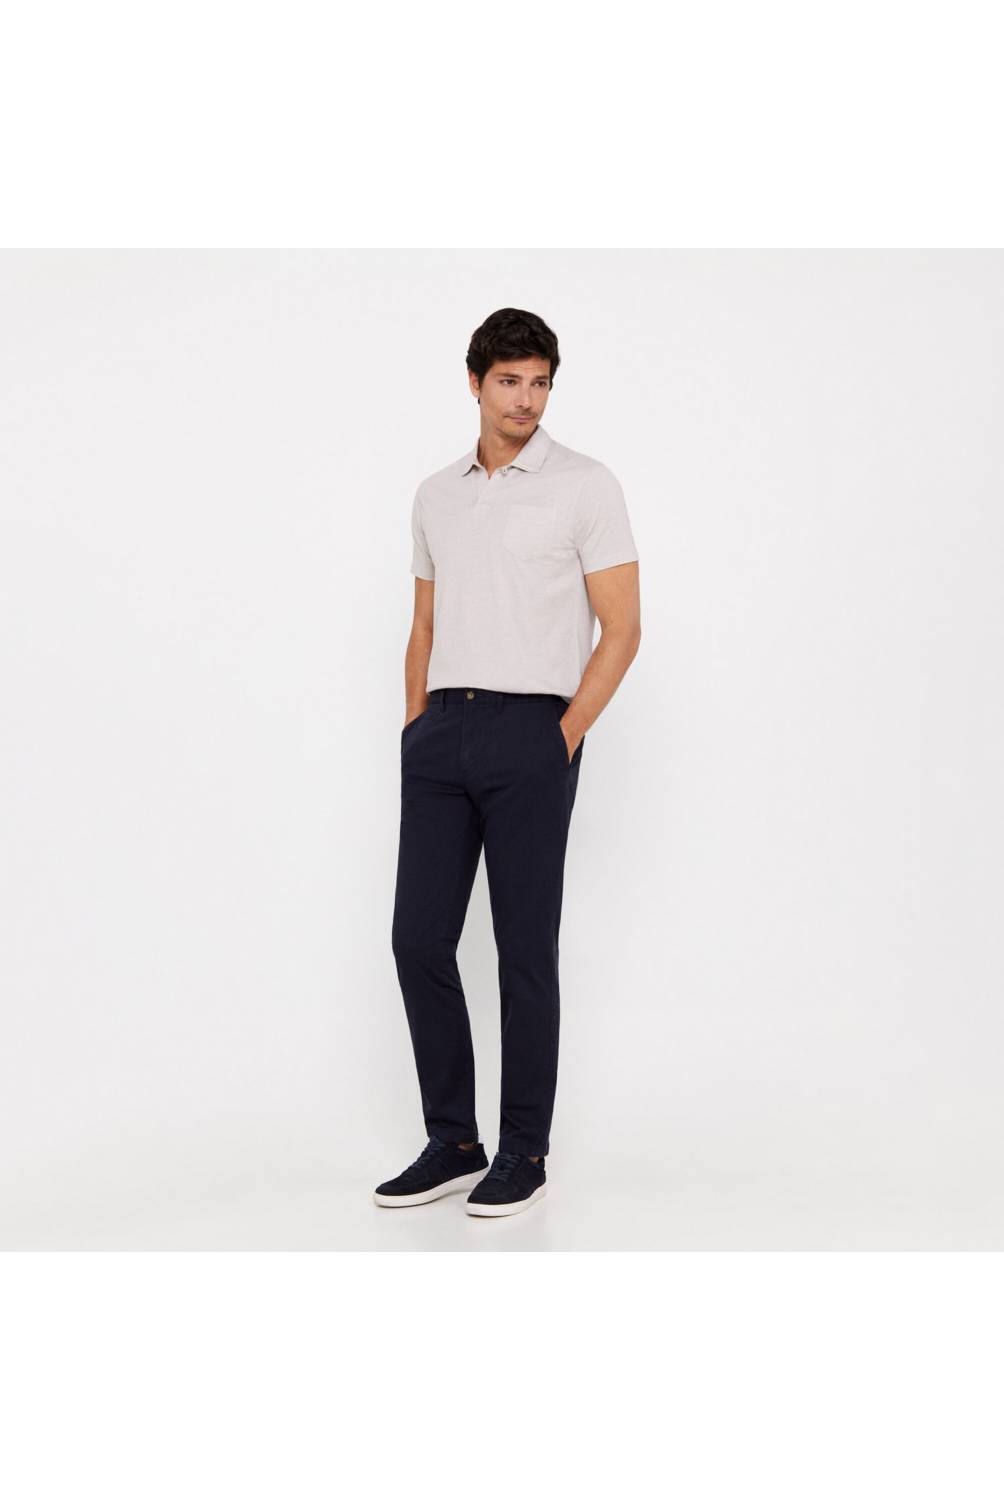 Pantalon Baggy 4.0 - Blanco – Tienda Nébula